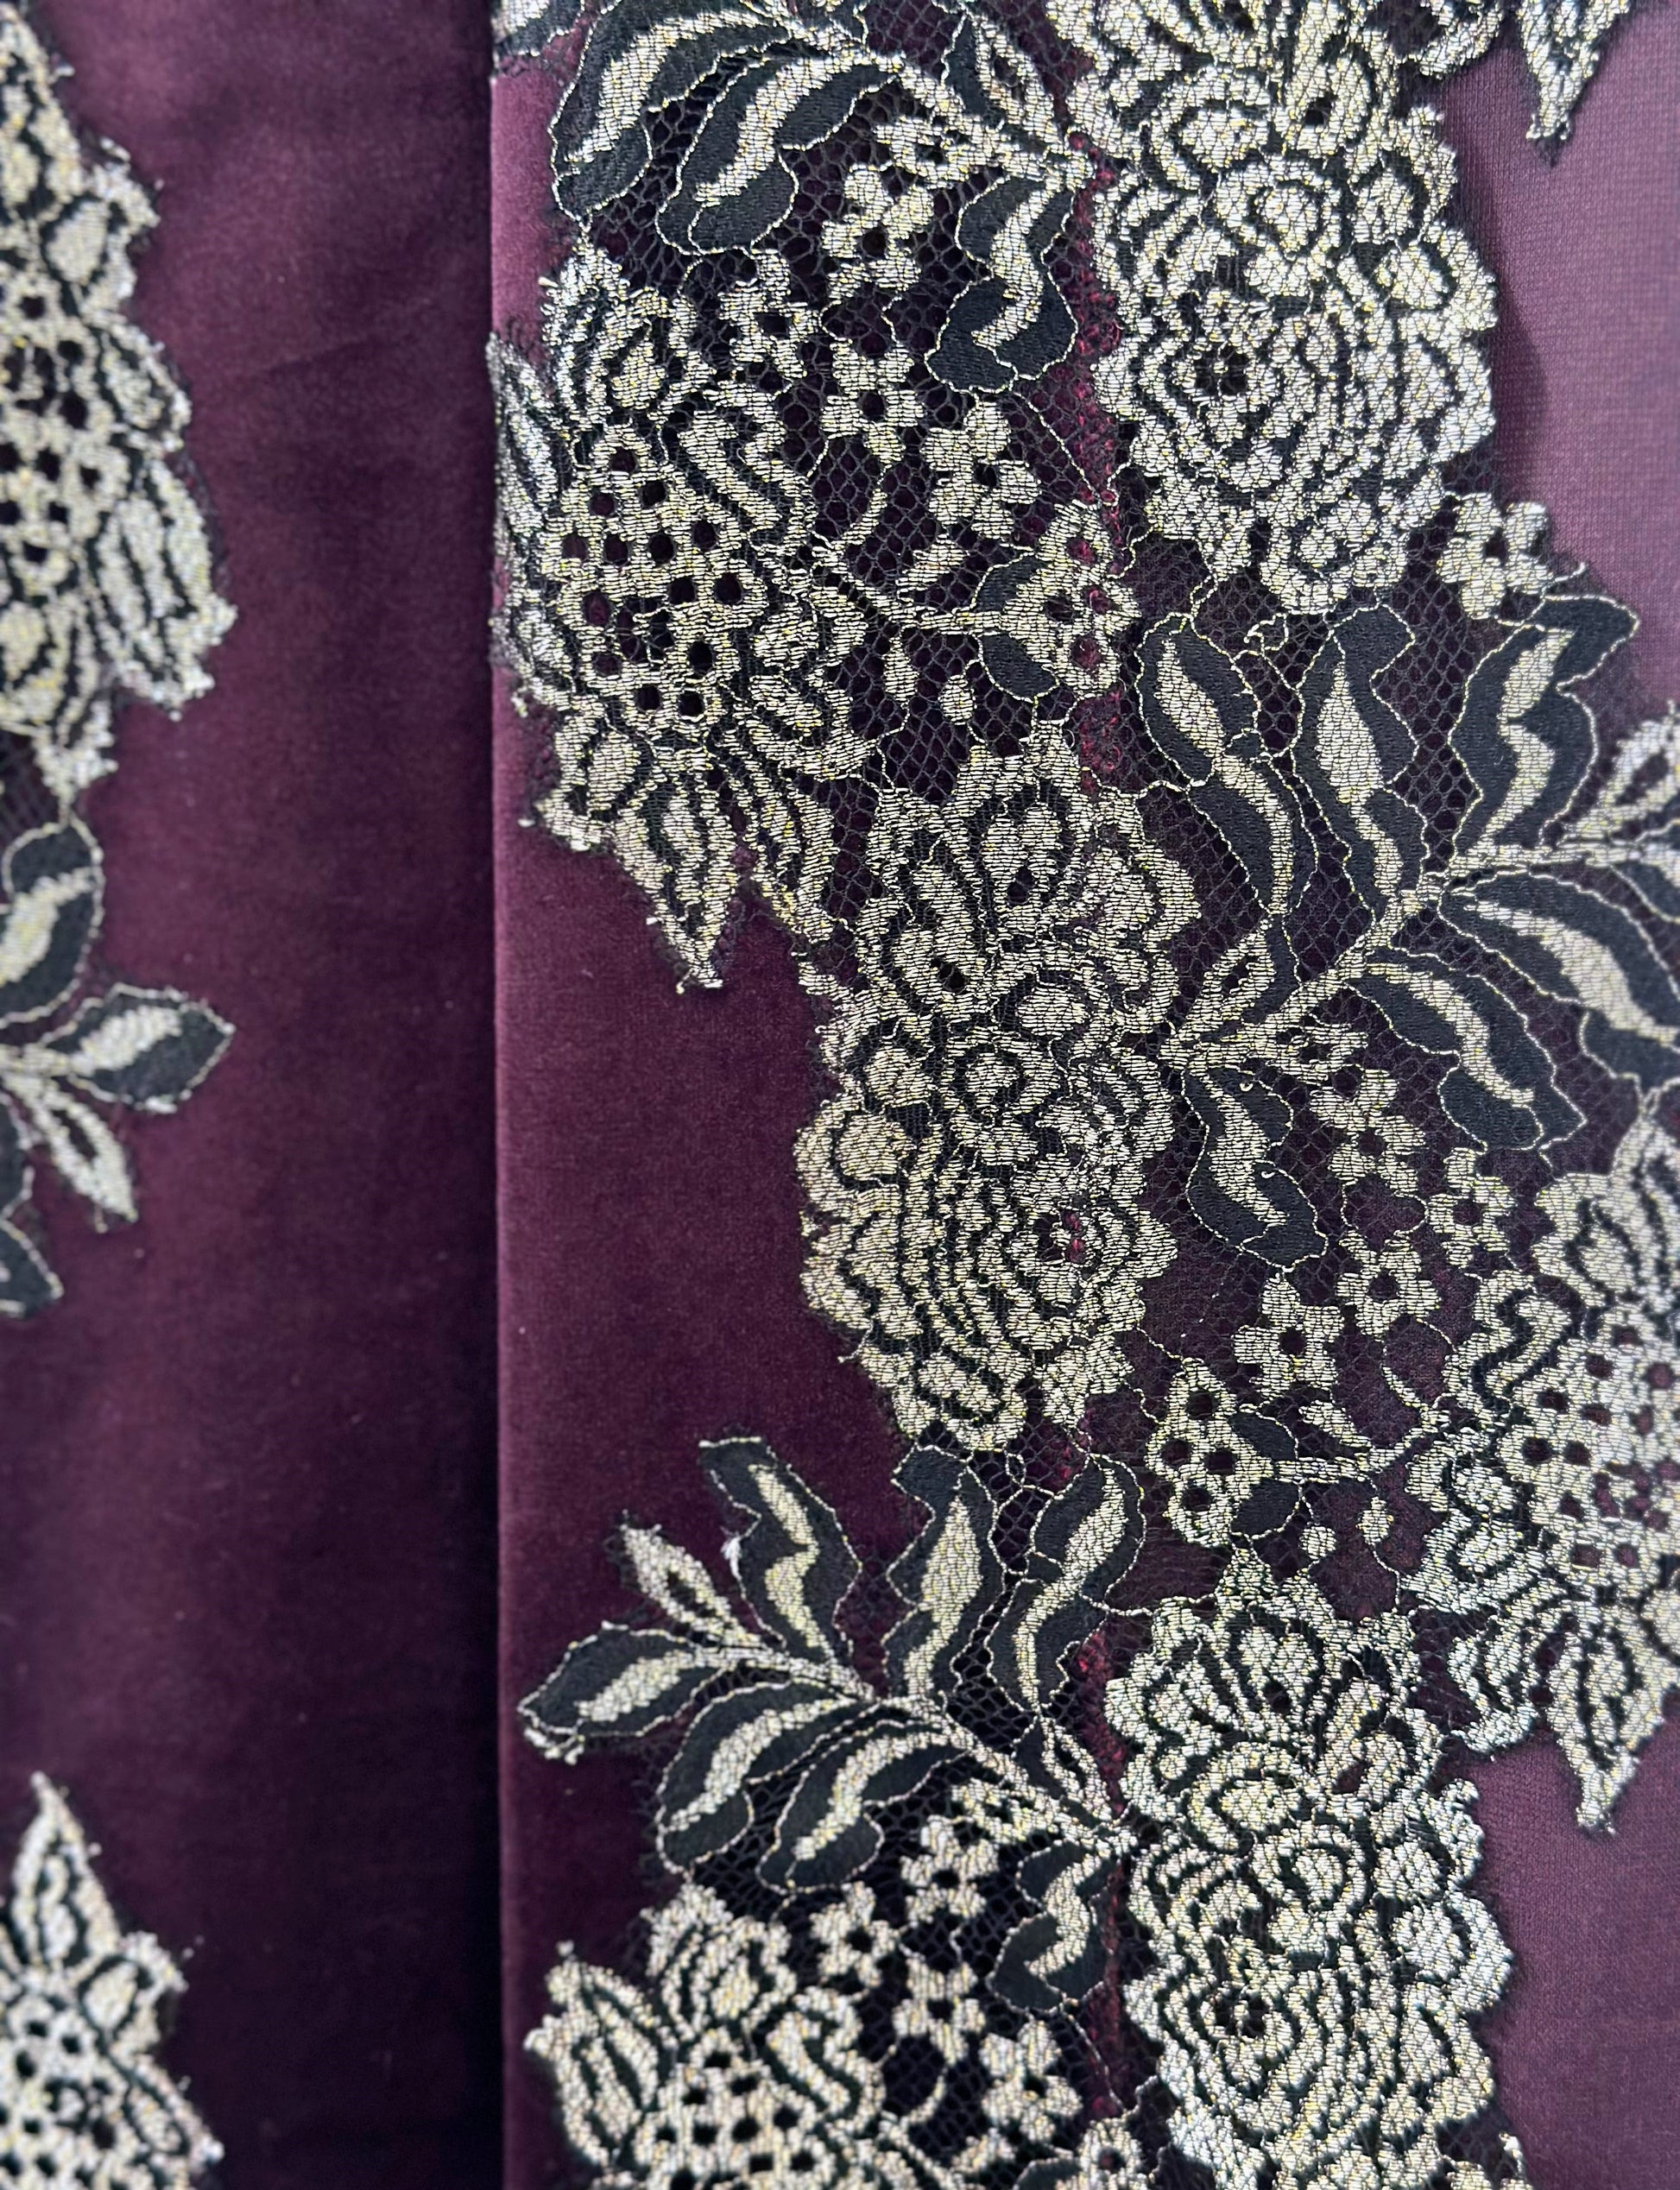 Luxurious Lace Velvet Shawl [Burgundy] - Craft Bazaar